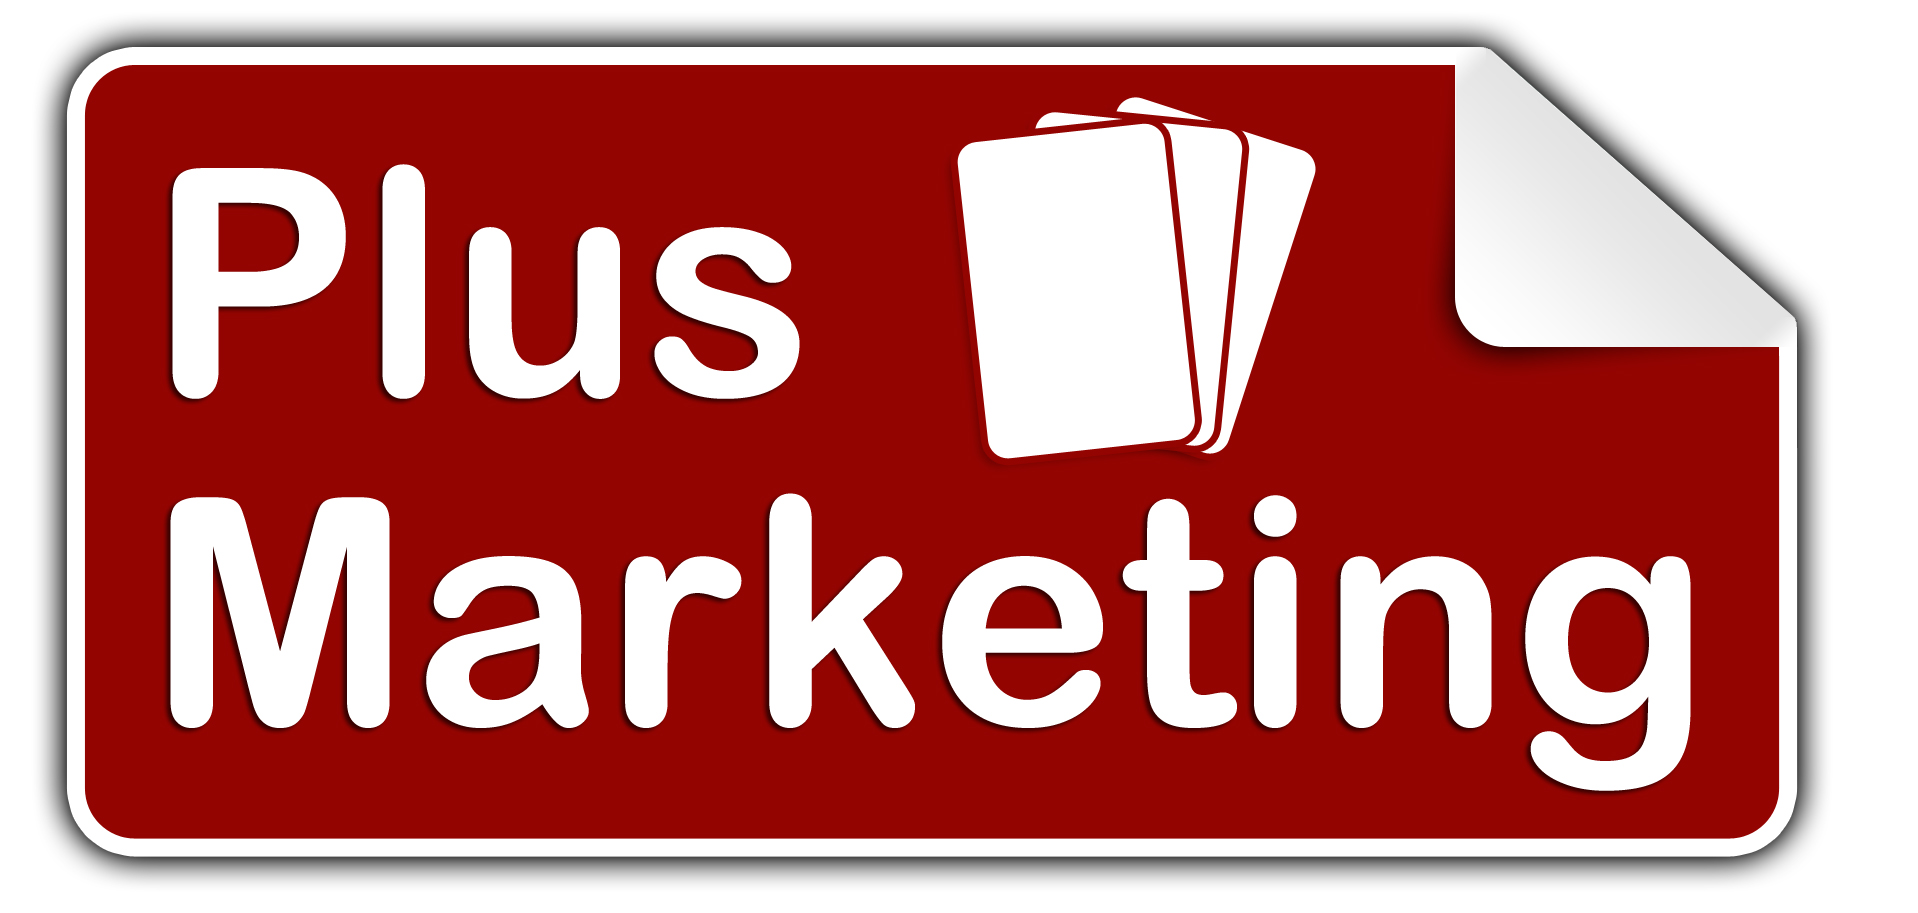 Plus Marketing (UK) Ltd